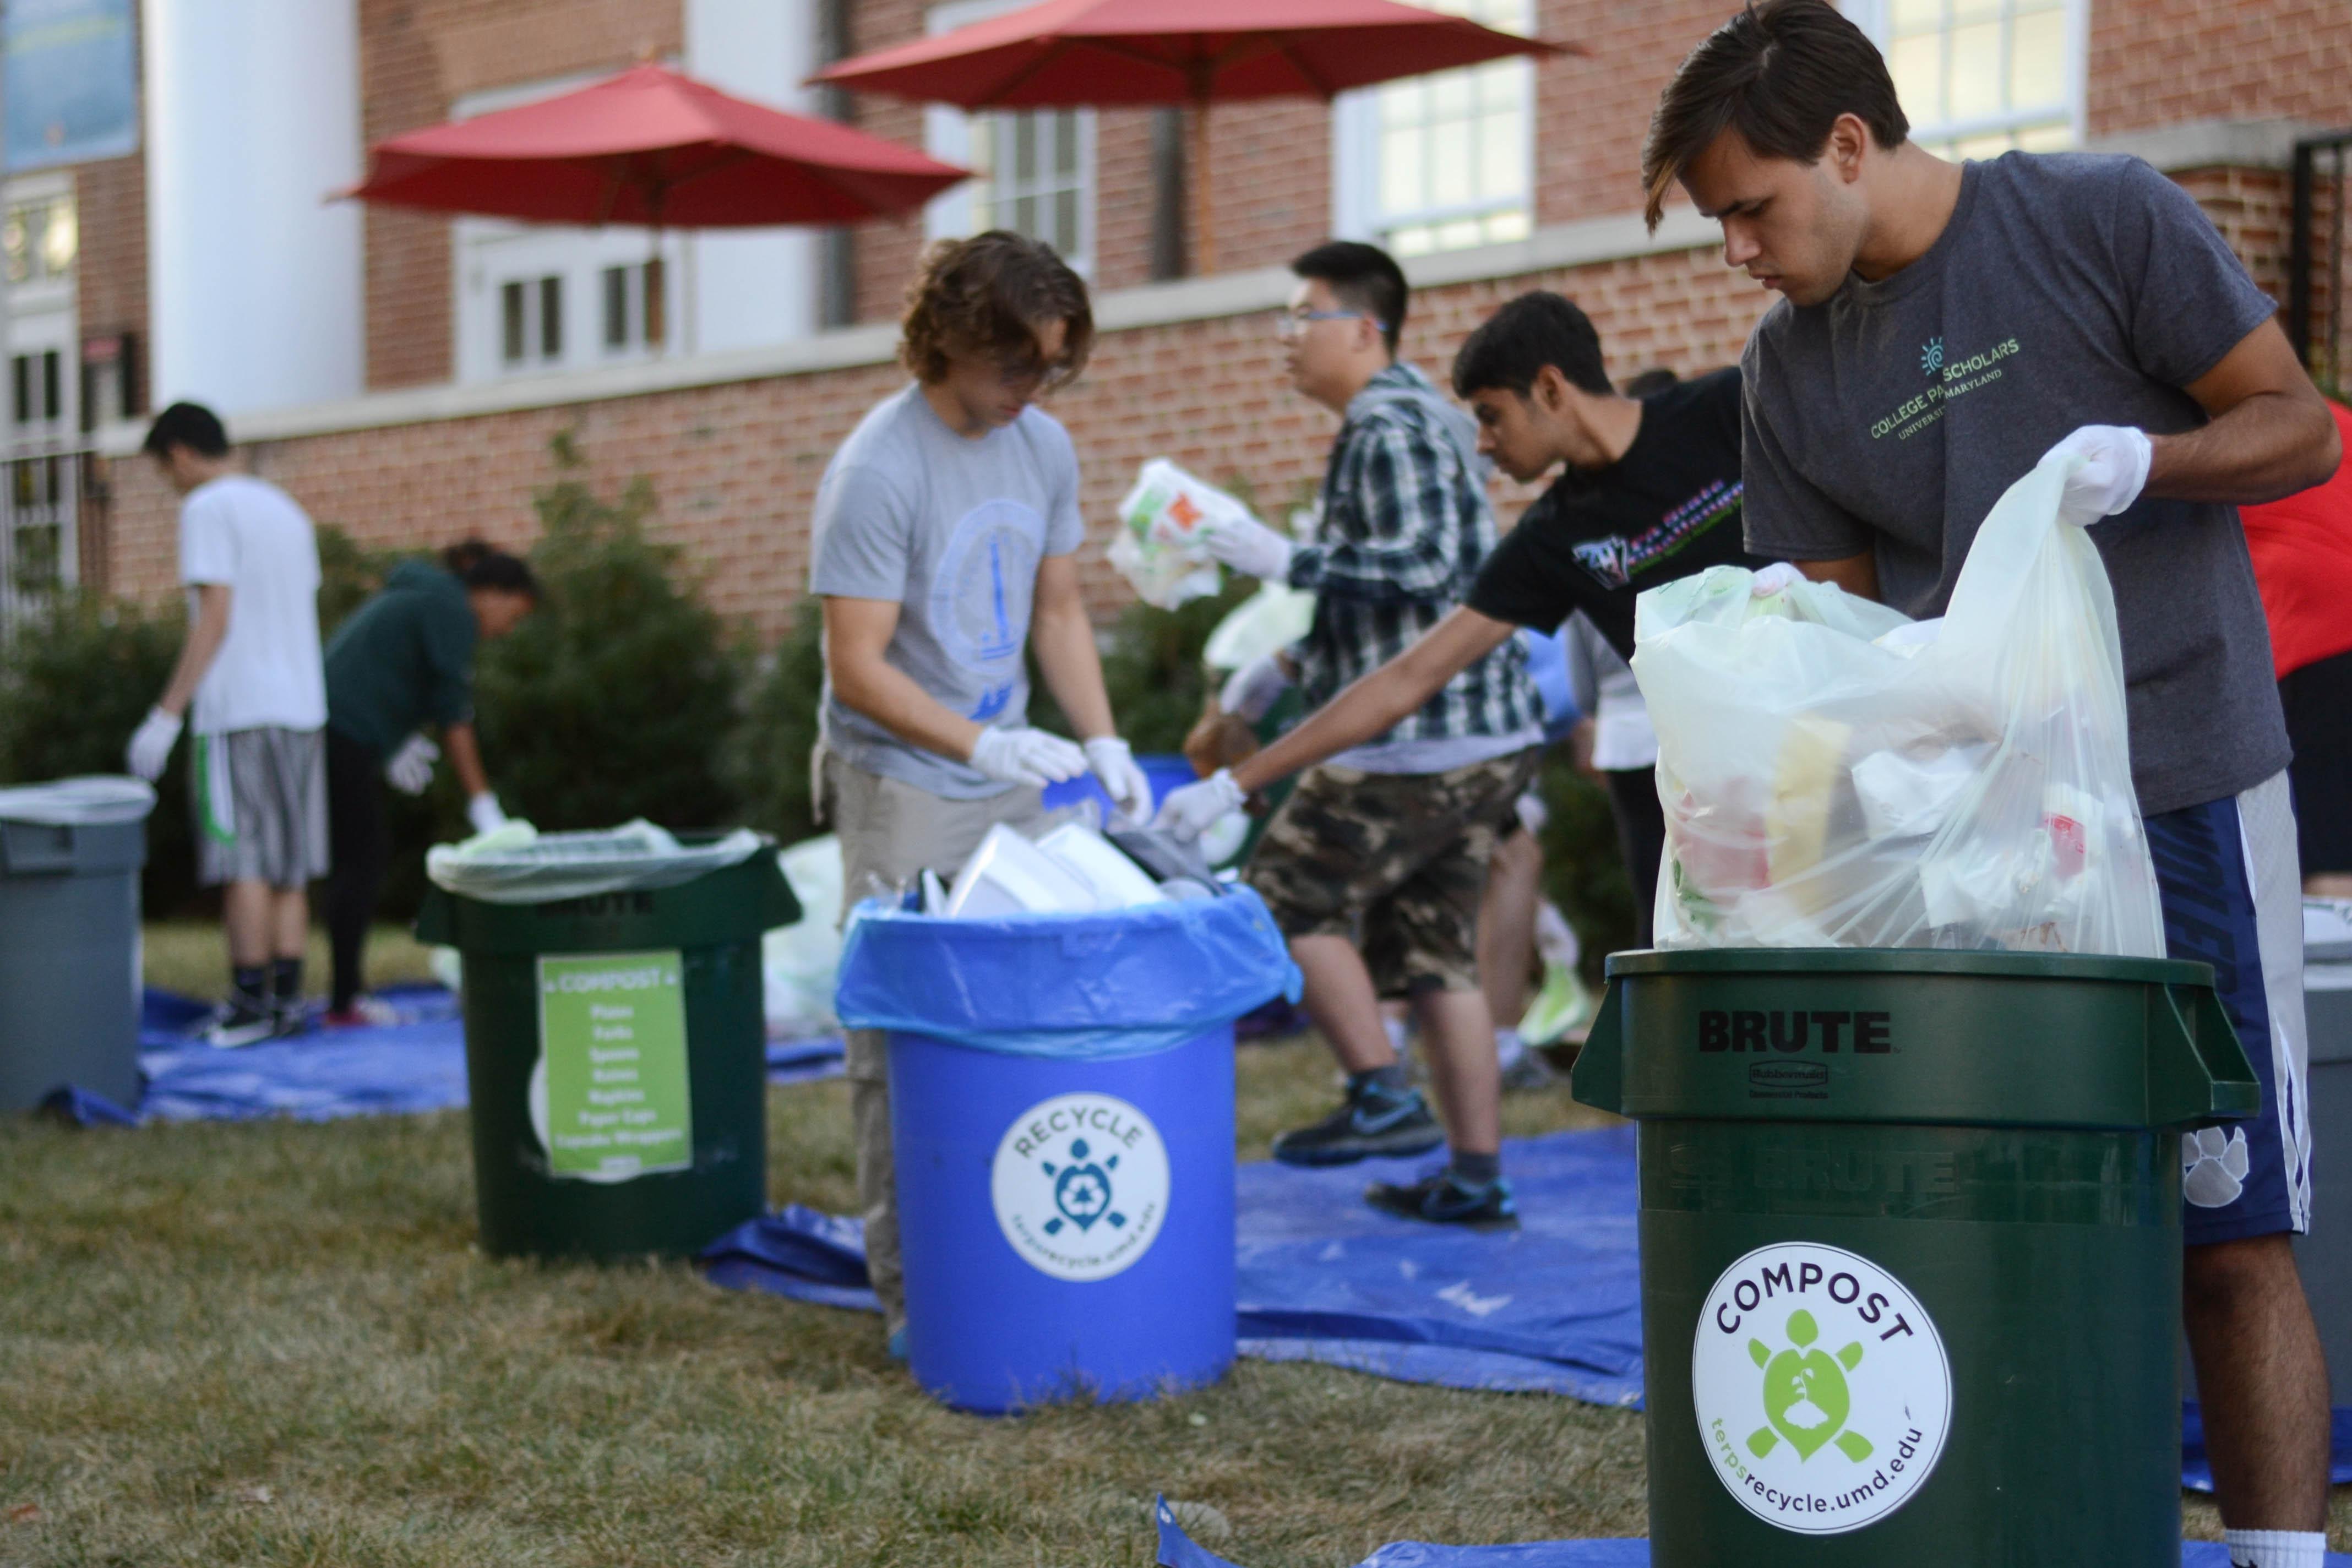 Student Volunteers sorting waste during a campus Waste Audit